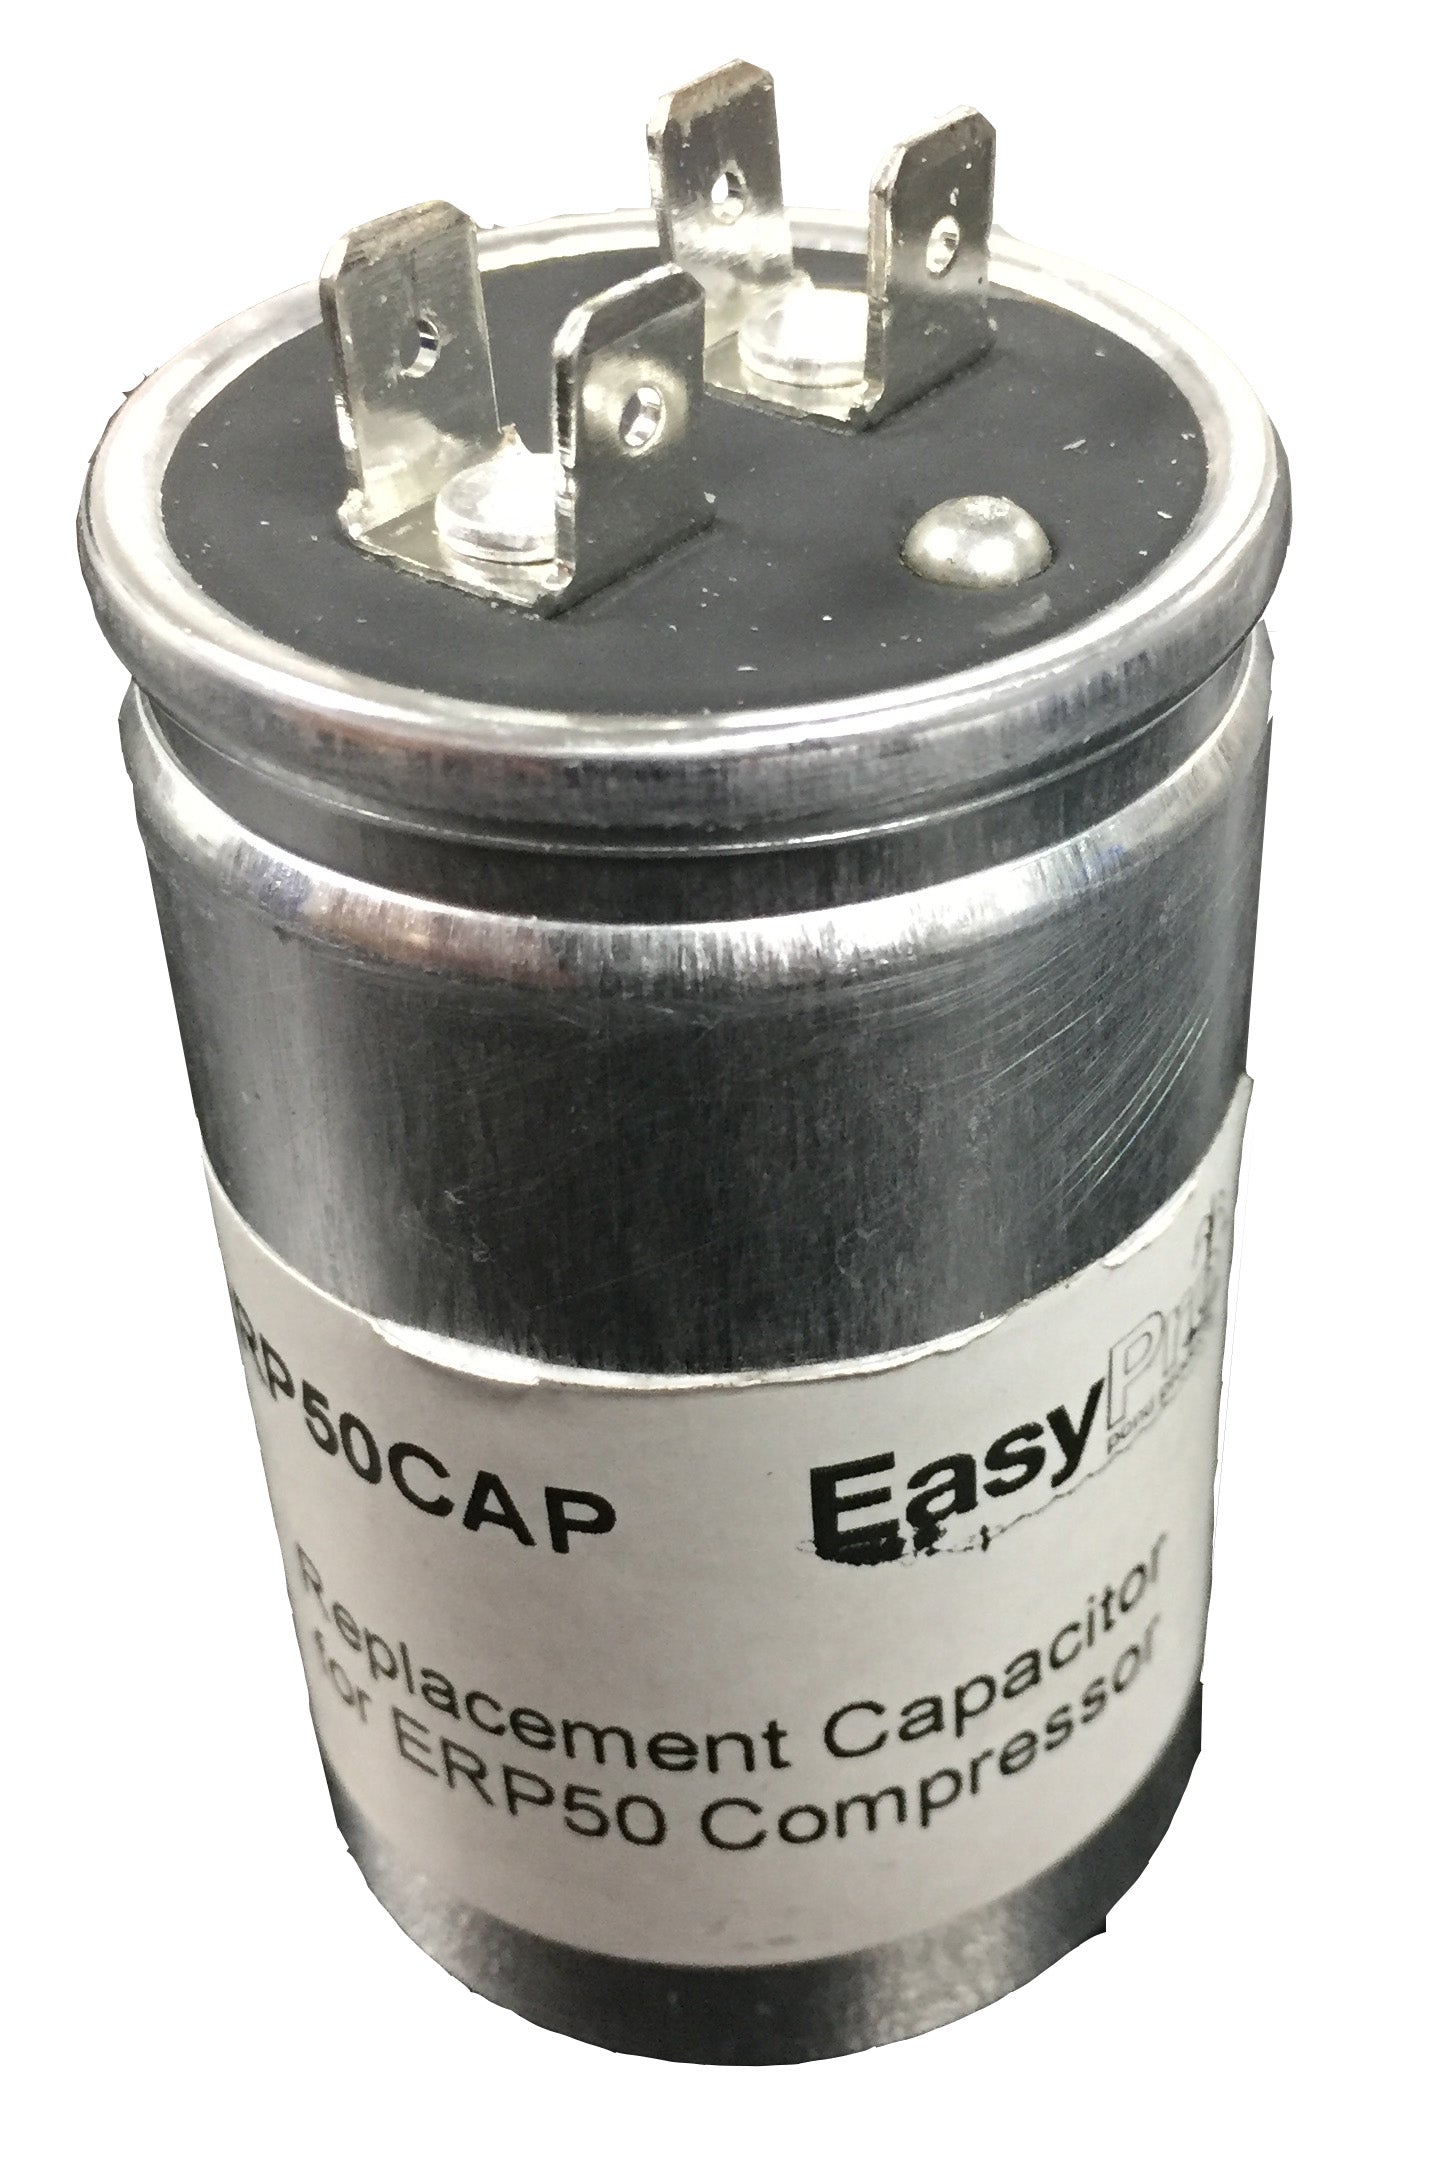 EasyPro ERP50CAP Starting Capacitor for ERP50 Rocking Piston Compressor